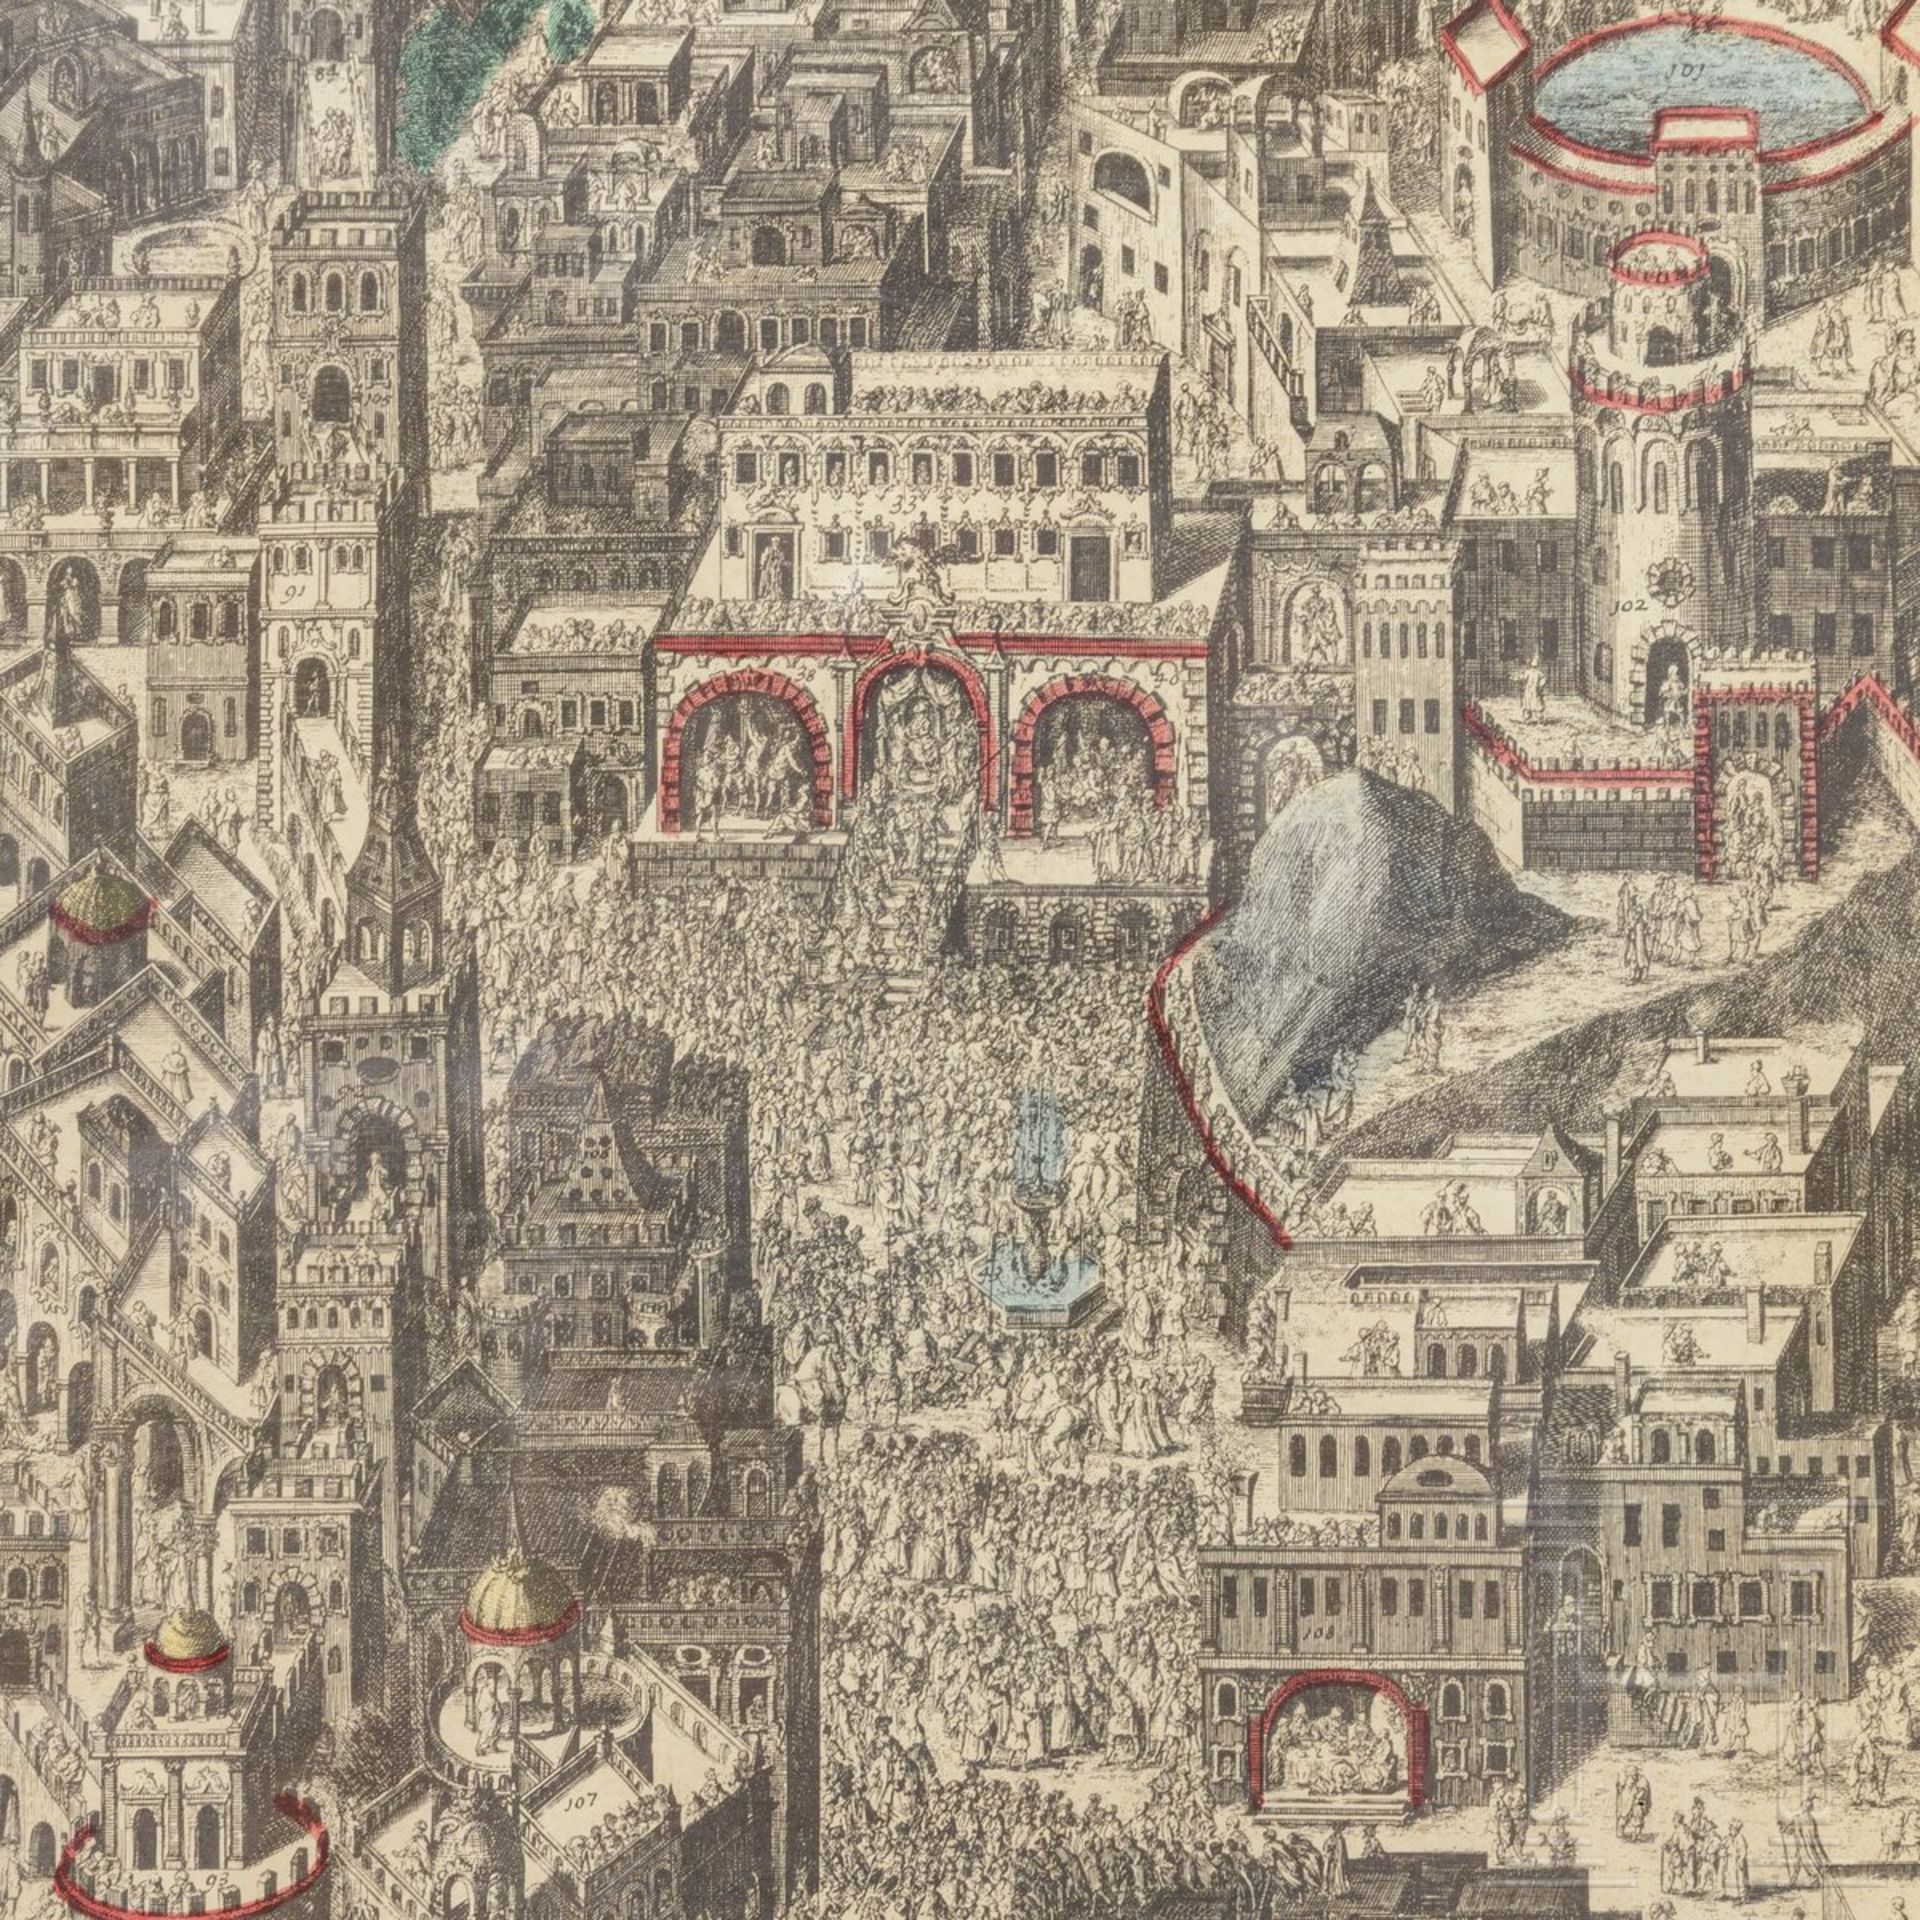 Johann Daniel Herz (1693 - 1754) - Gesamtpanorama der Stadt Jerusalem, kolorierter Kupferstich, 1735 - Image 3 of 8